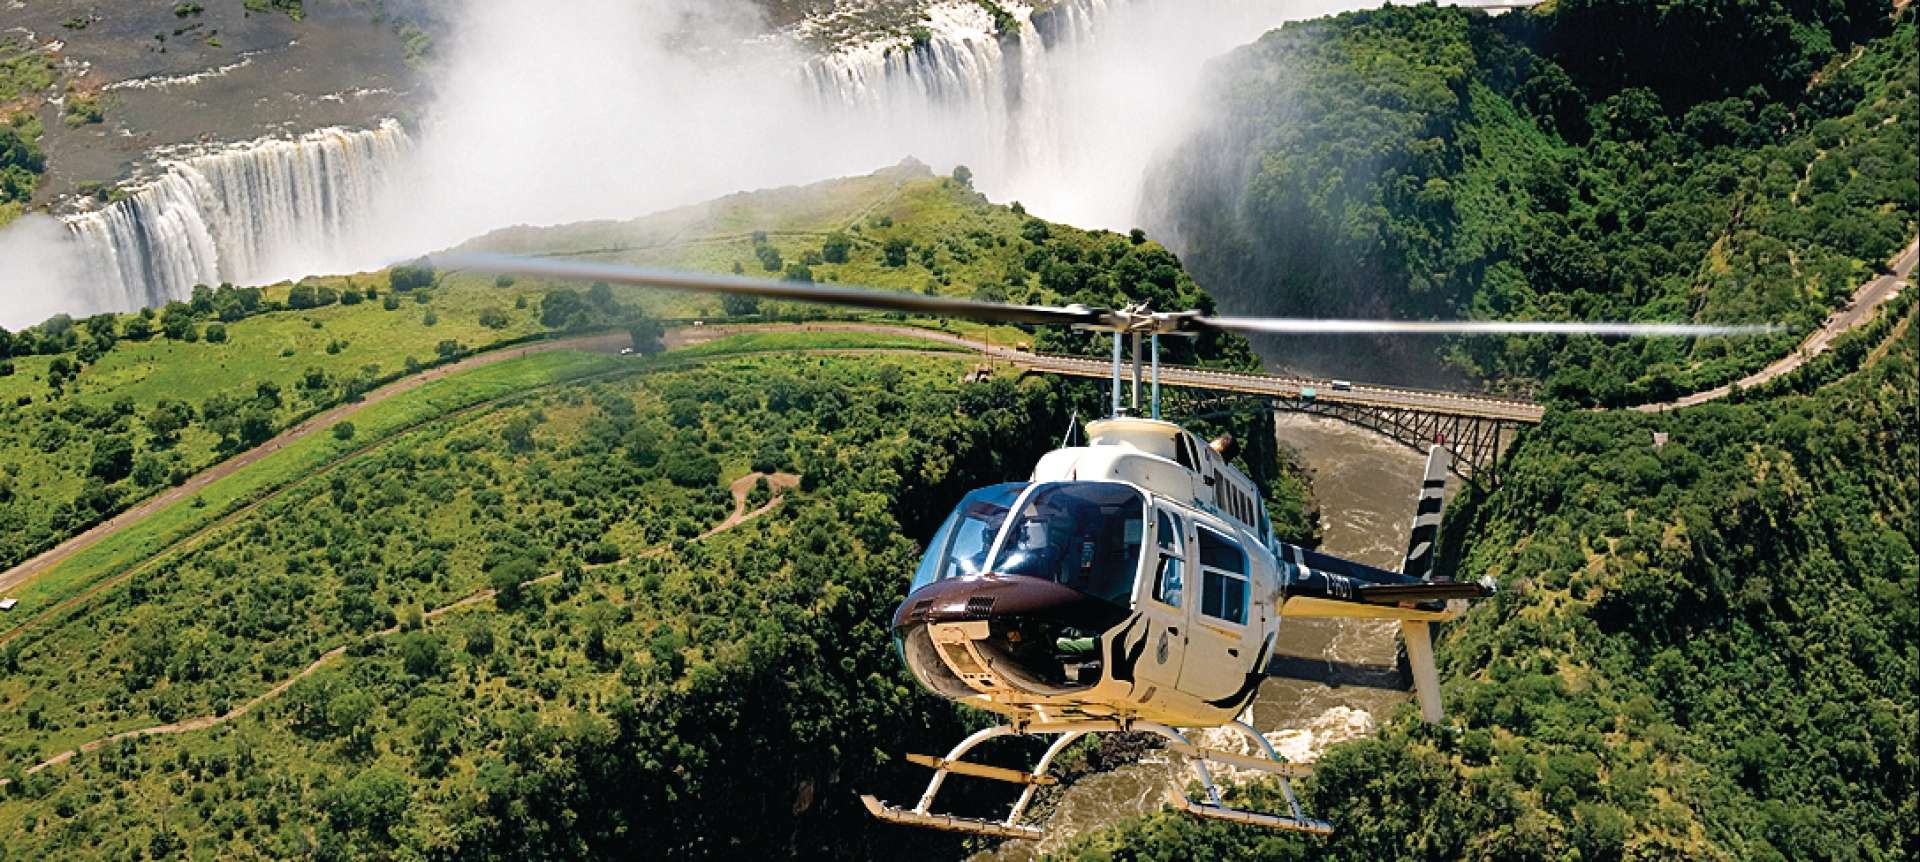  Victoria falls in Zambia and Zimbabwe